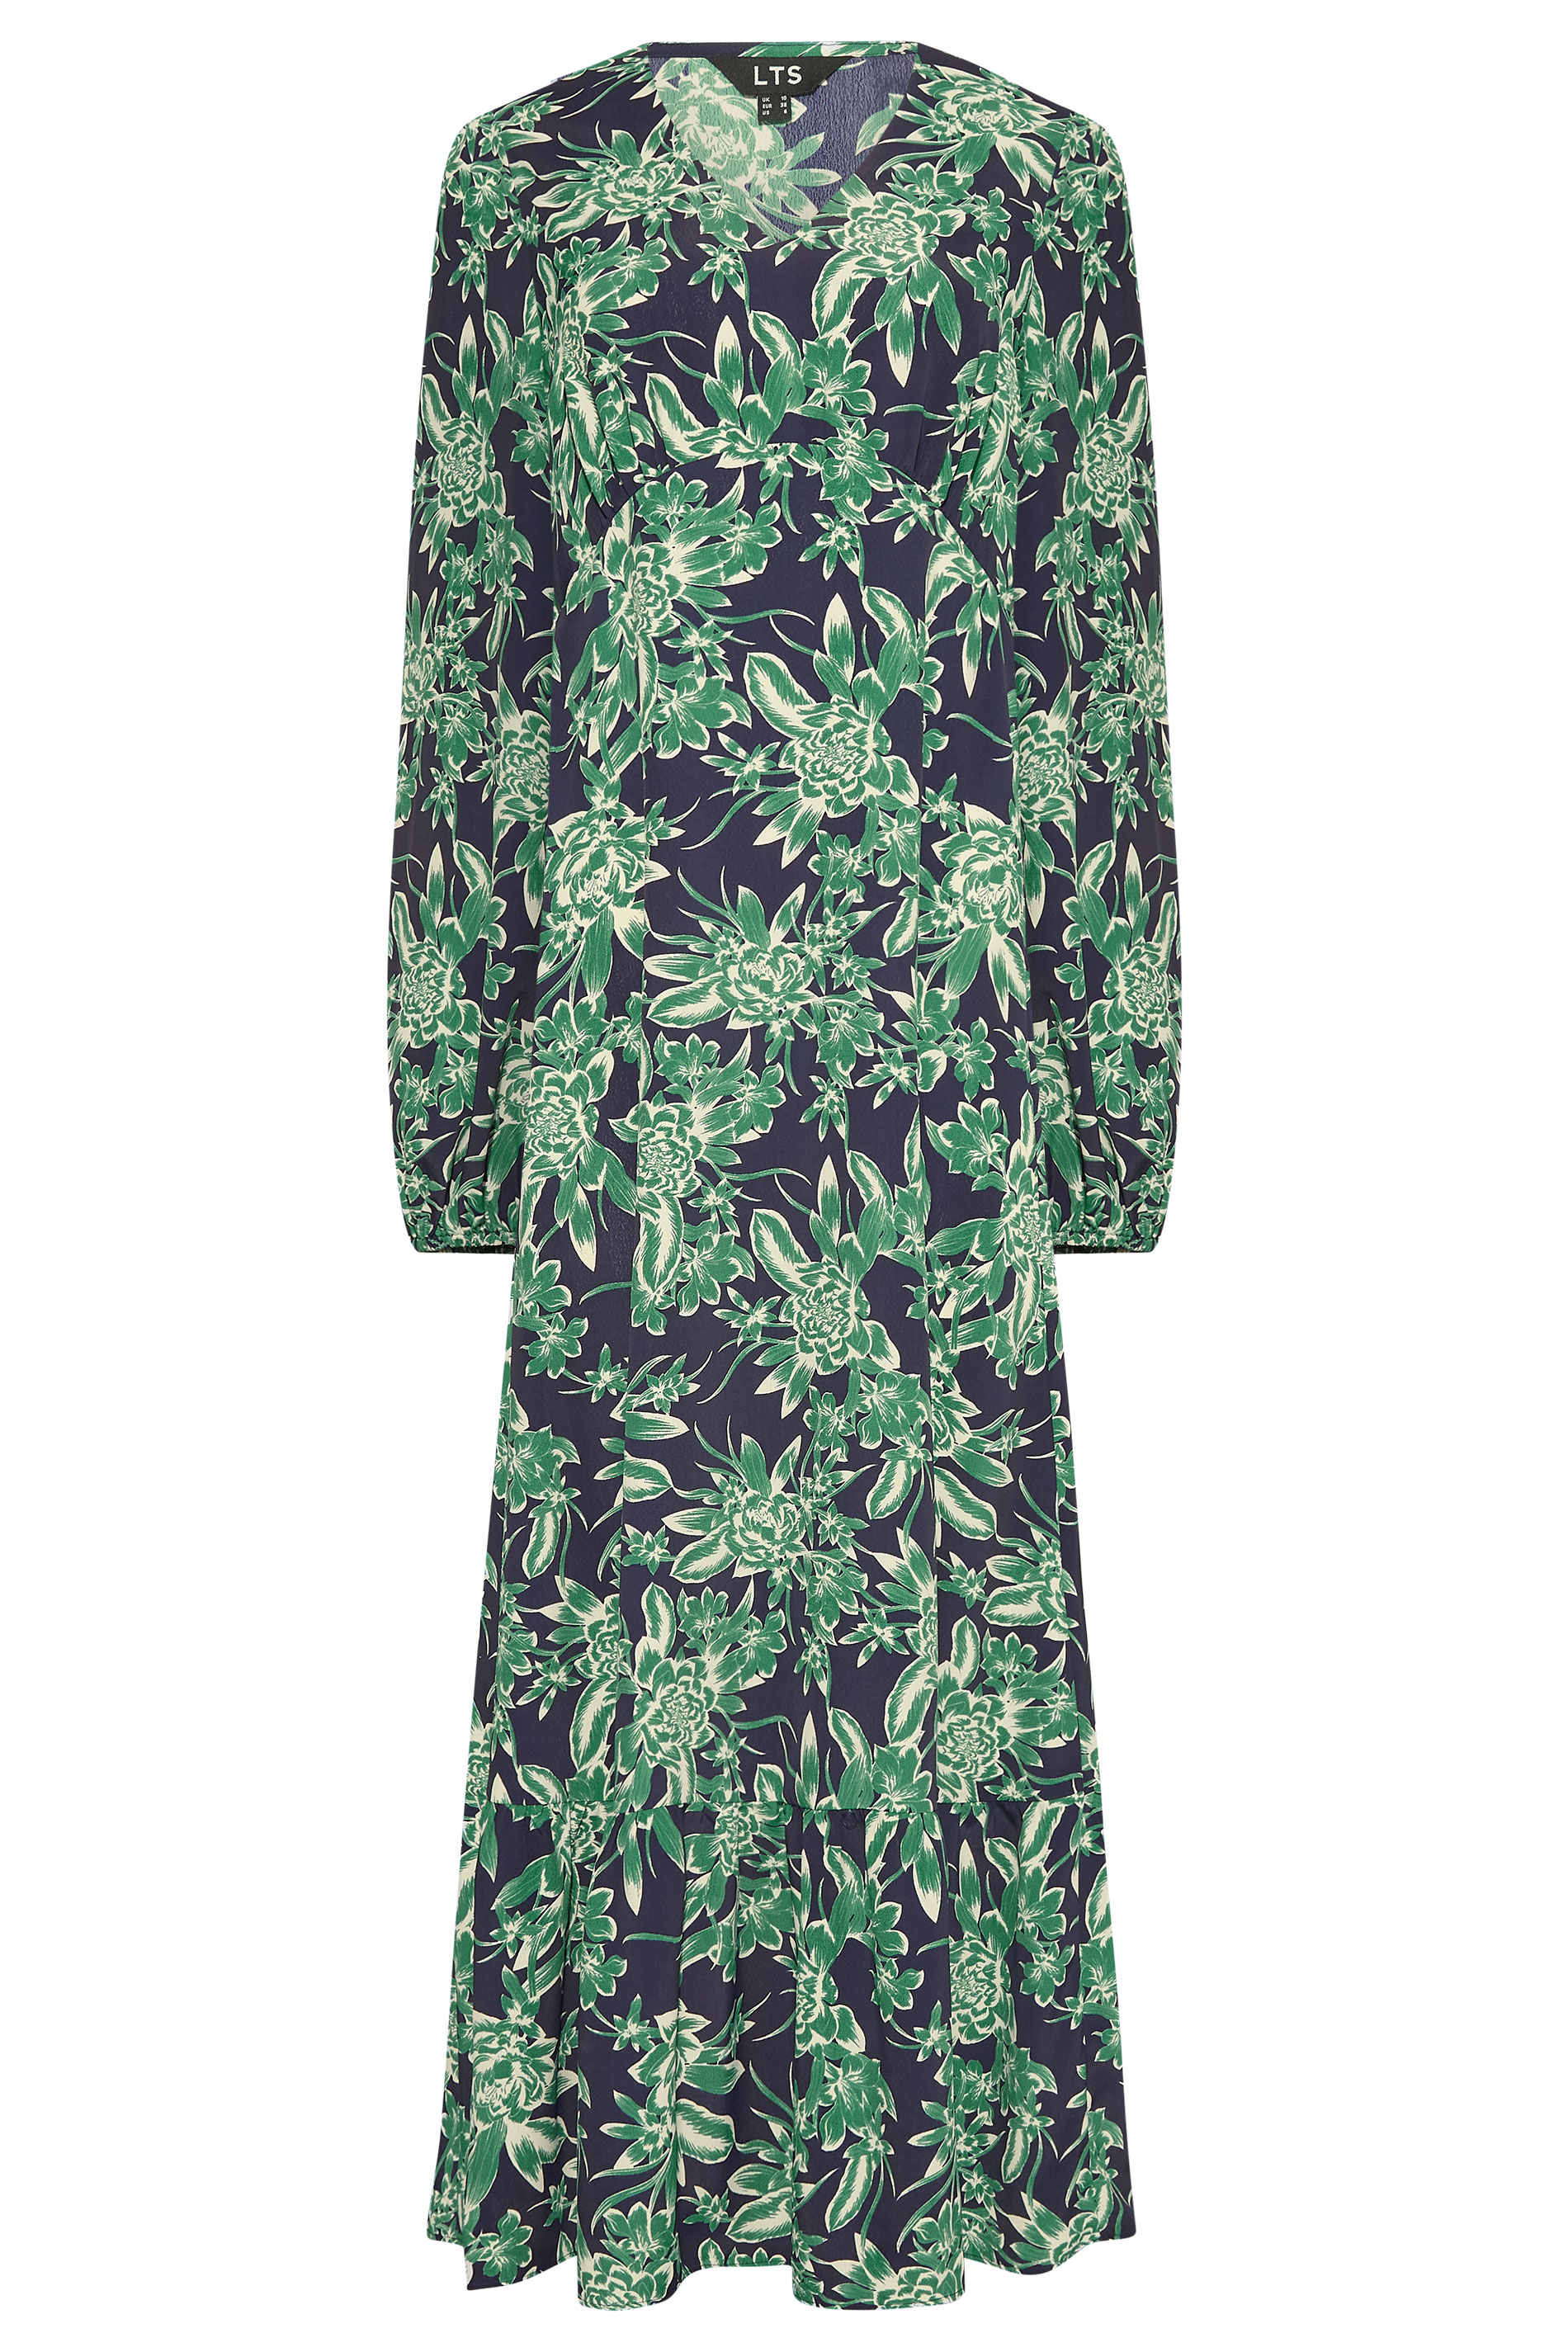 Tall Women's LTS Navy Blue Floral Print Smock Midi Dress | Long Tall Sally